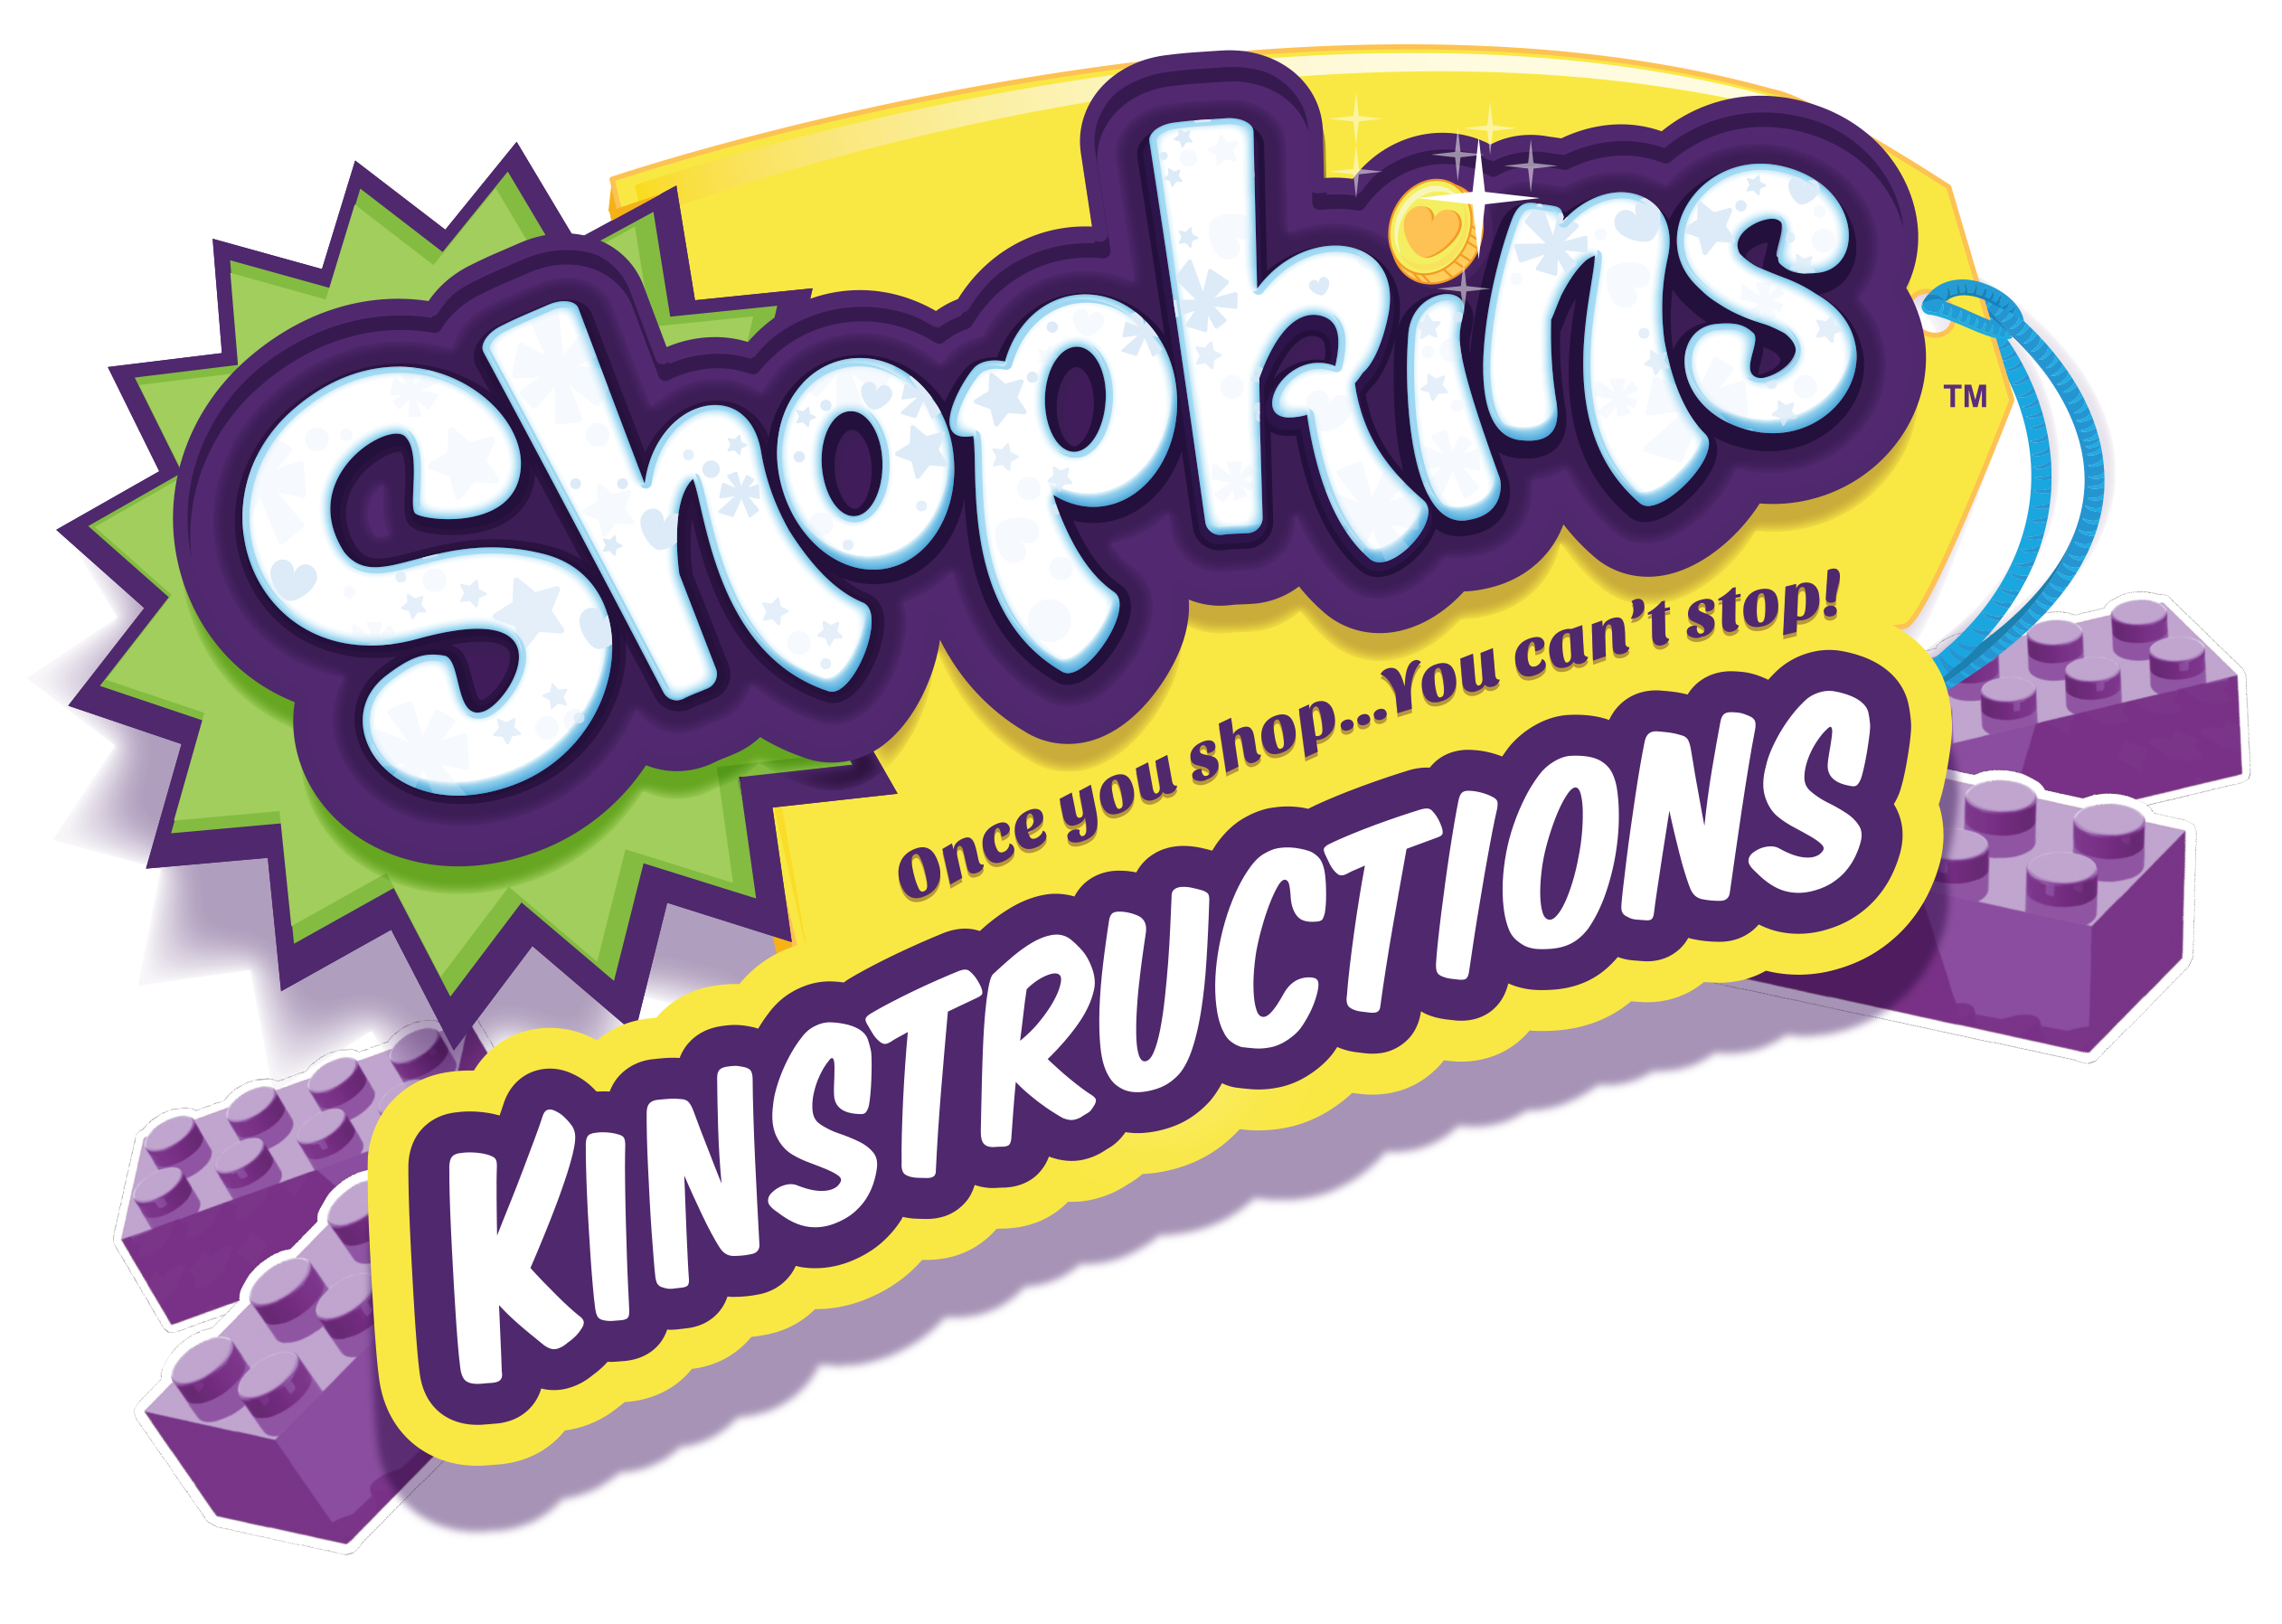 Shopkins Kinstructions logo